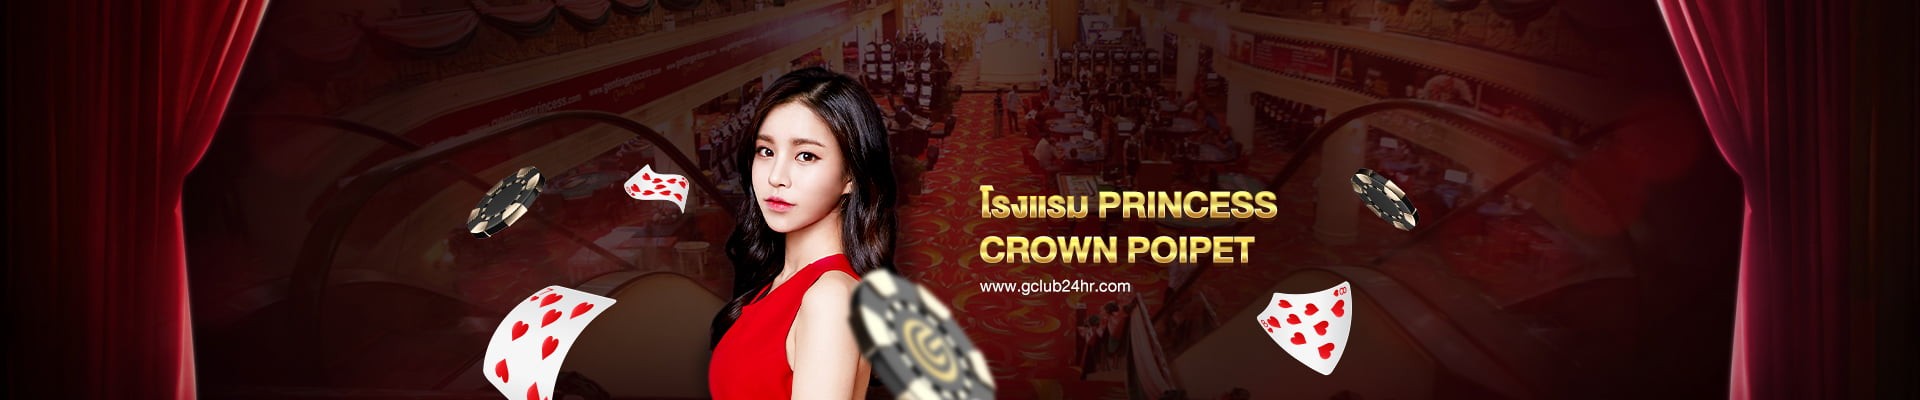 gclub24hr_casino_online_princess_crown_poipet